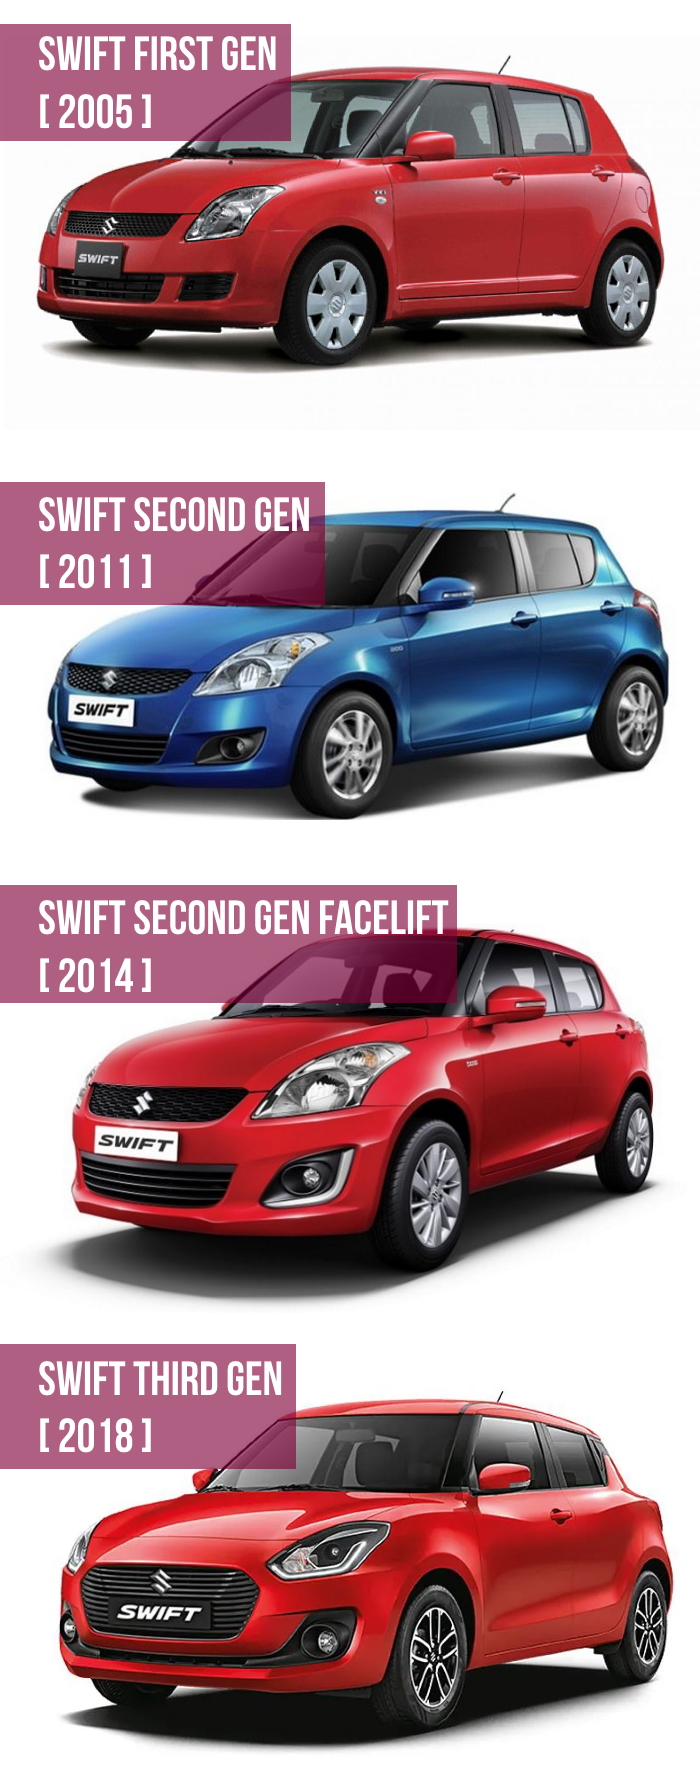 Suzuki Swift: Used Car Buyers' Guide